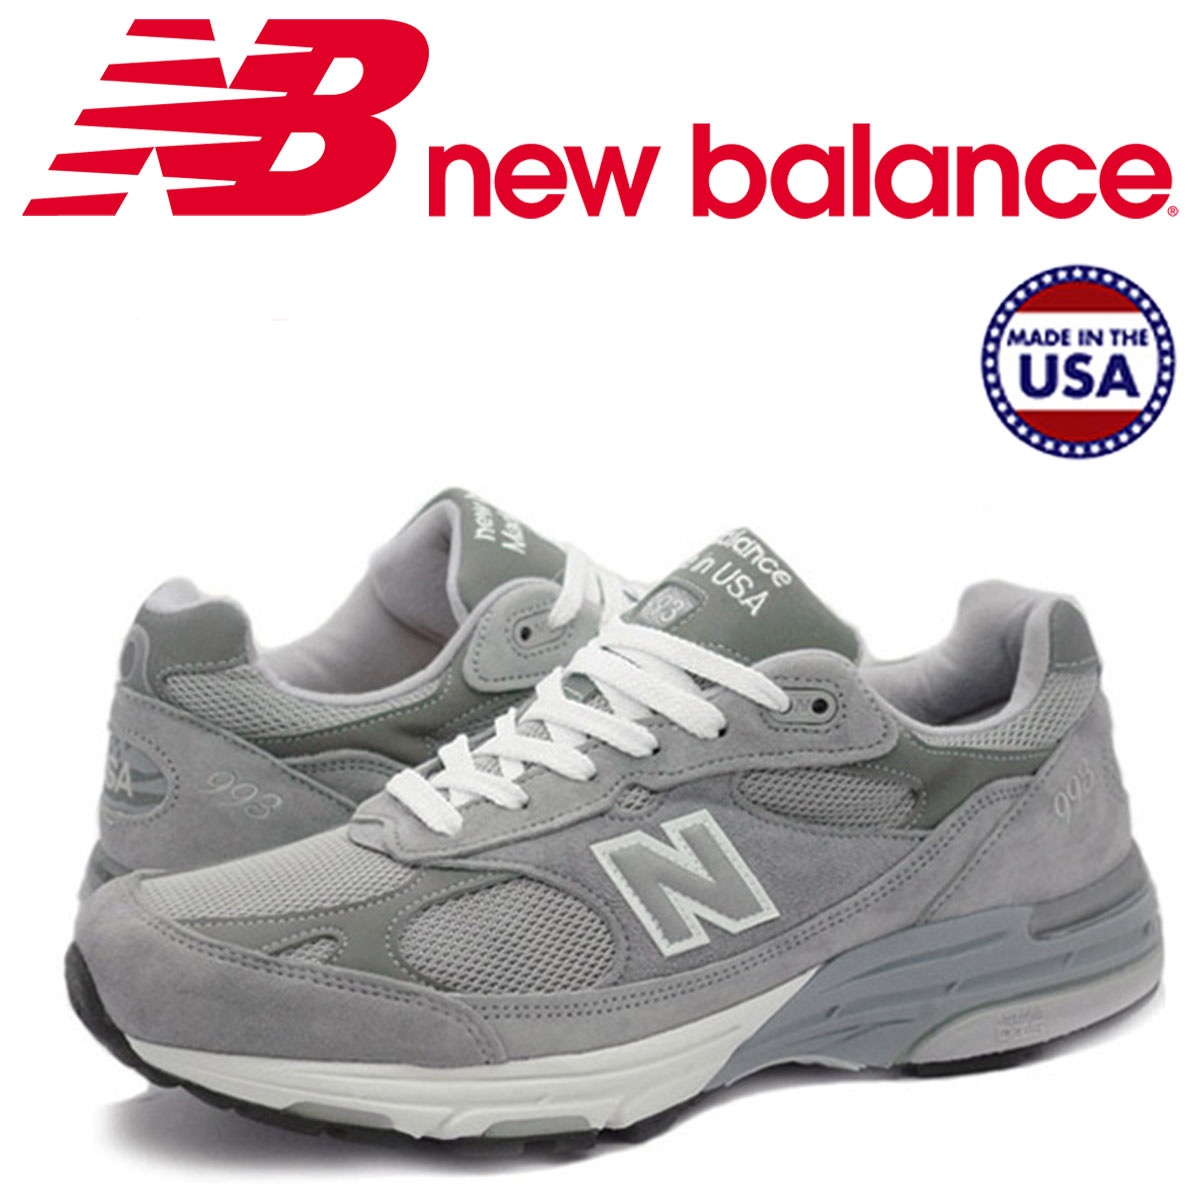 New balance номера. New Balance 993. New Balance made in USA 993 mr993gl. Кроссовки New Balance 993. Кроссовки Нью баланс 806.